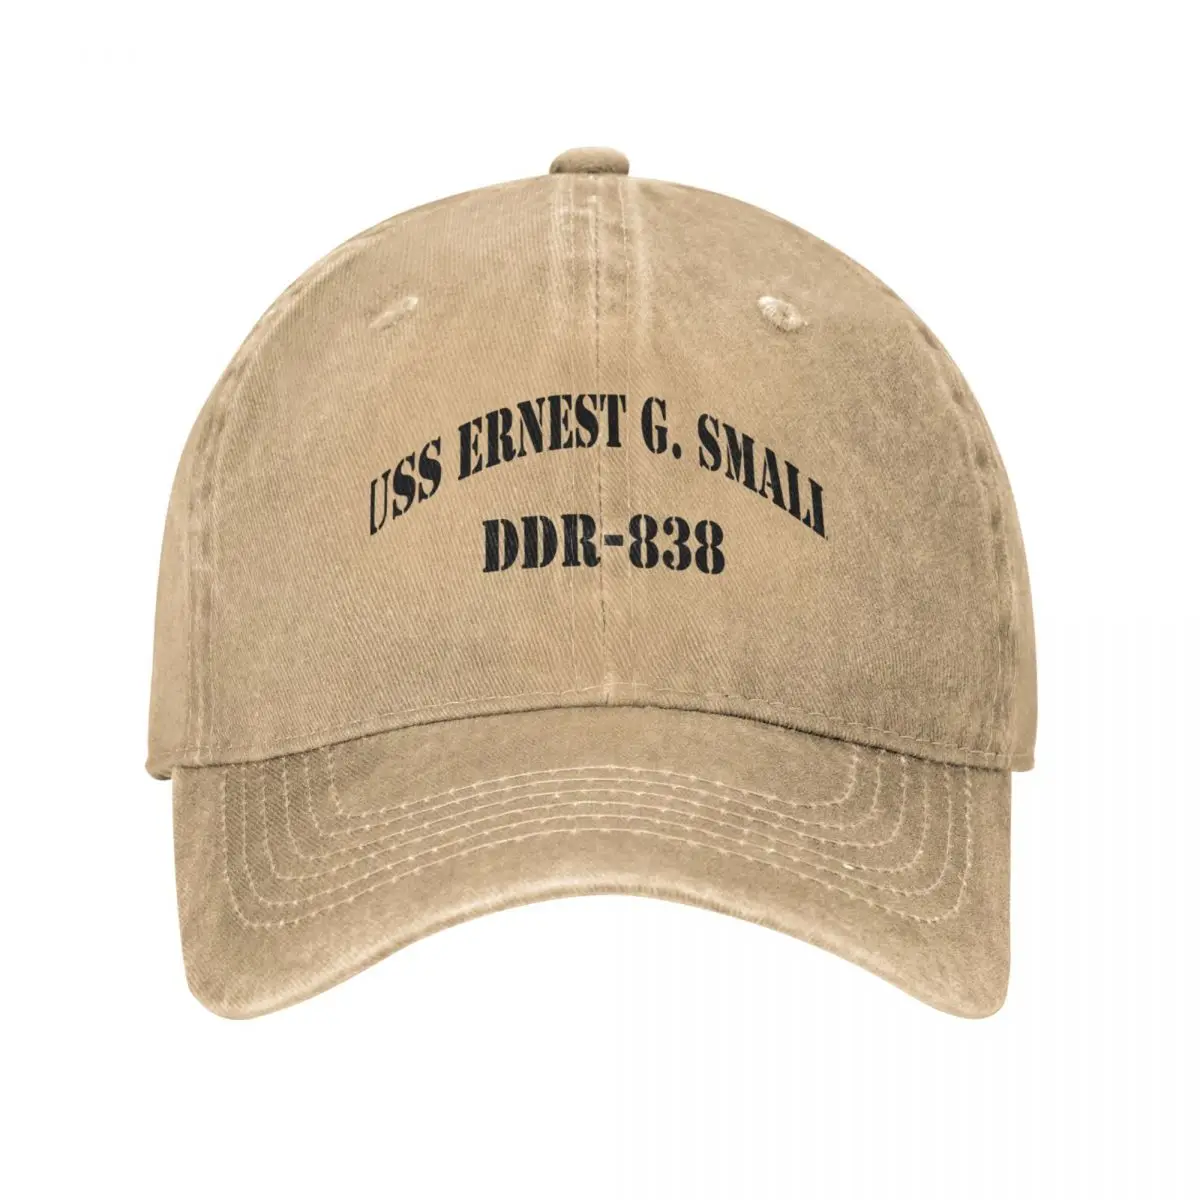 

USS ERNEST G. SMALL (DDR-838) SHIP'S STORE Cowboy Hat party hats beach hat Uv Protection Solar Hat Man Cap Women'S